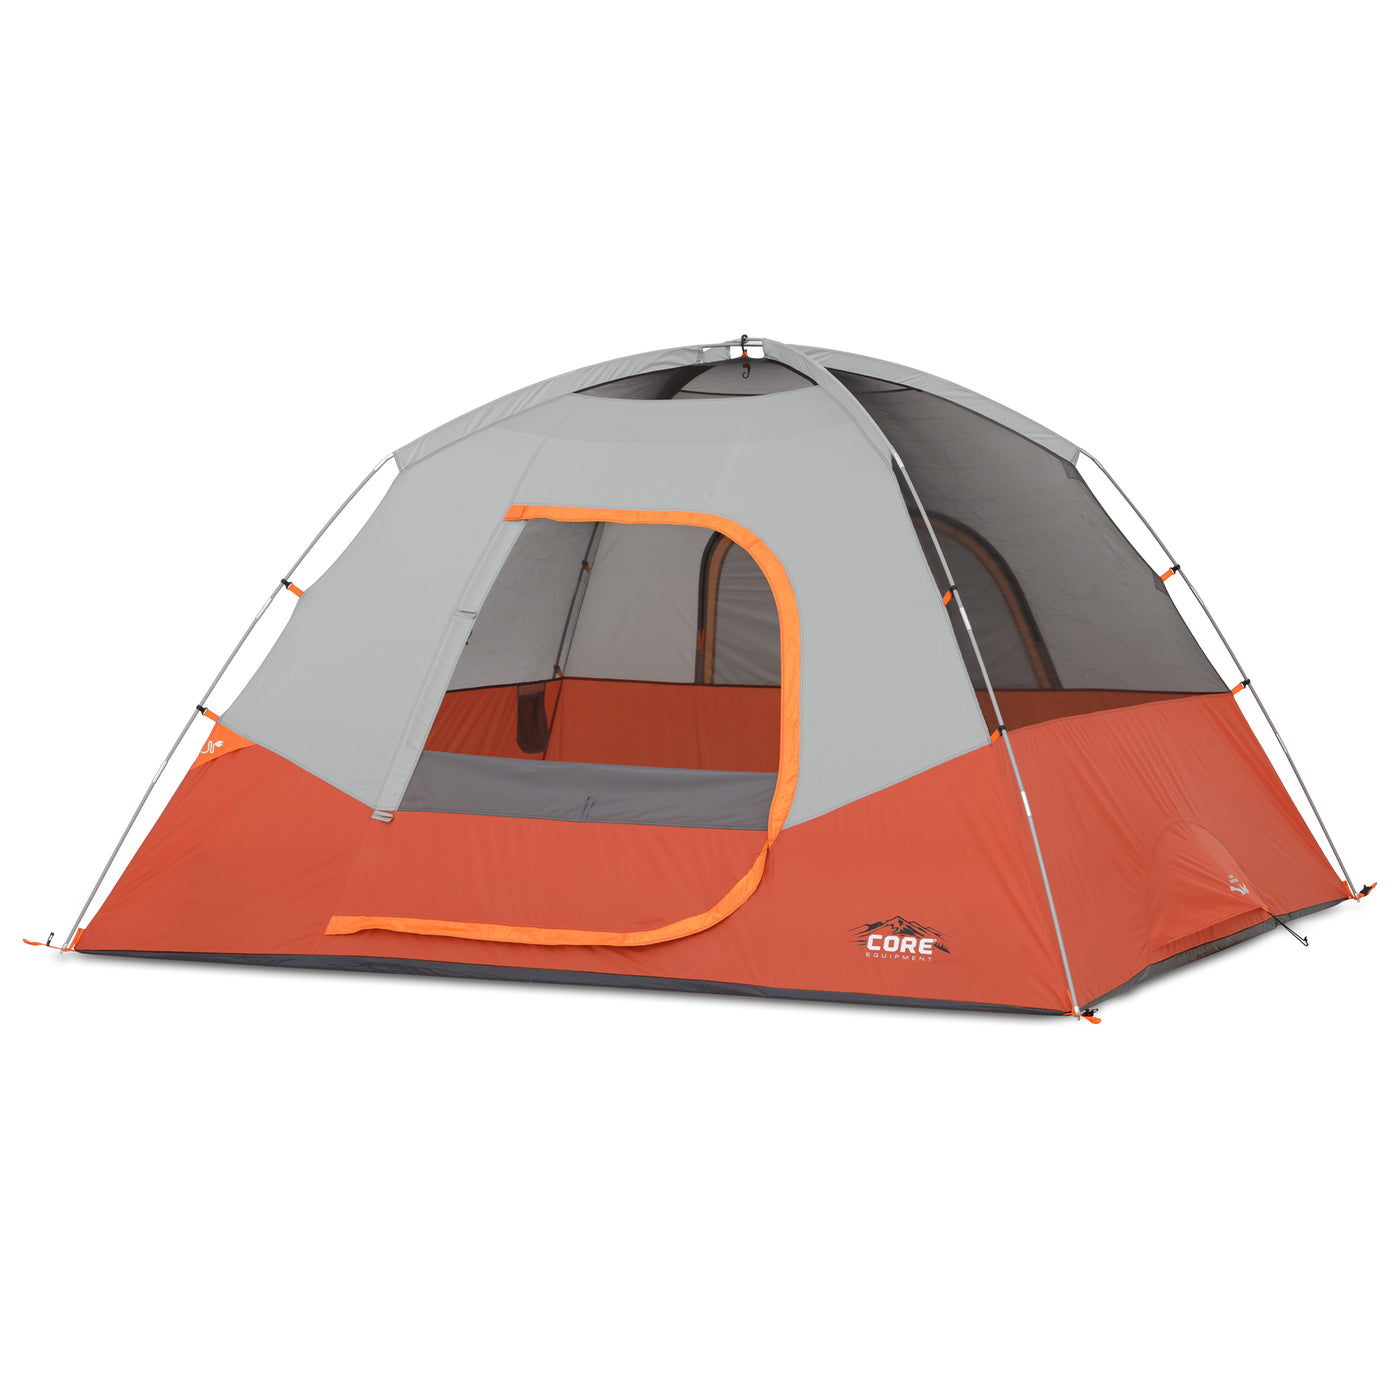 6 Person Dome Plus Tent with Vestibule 10' x 9'